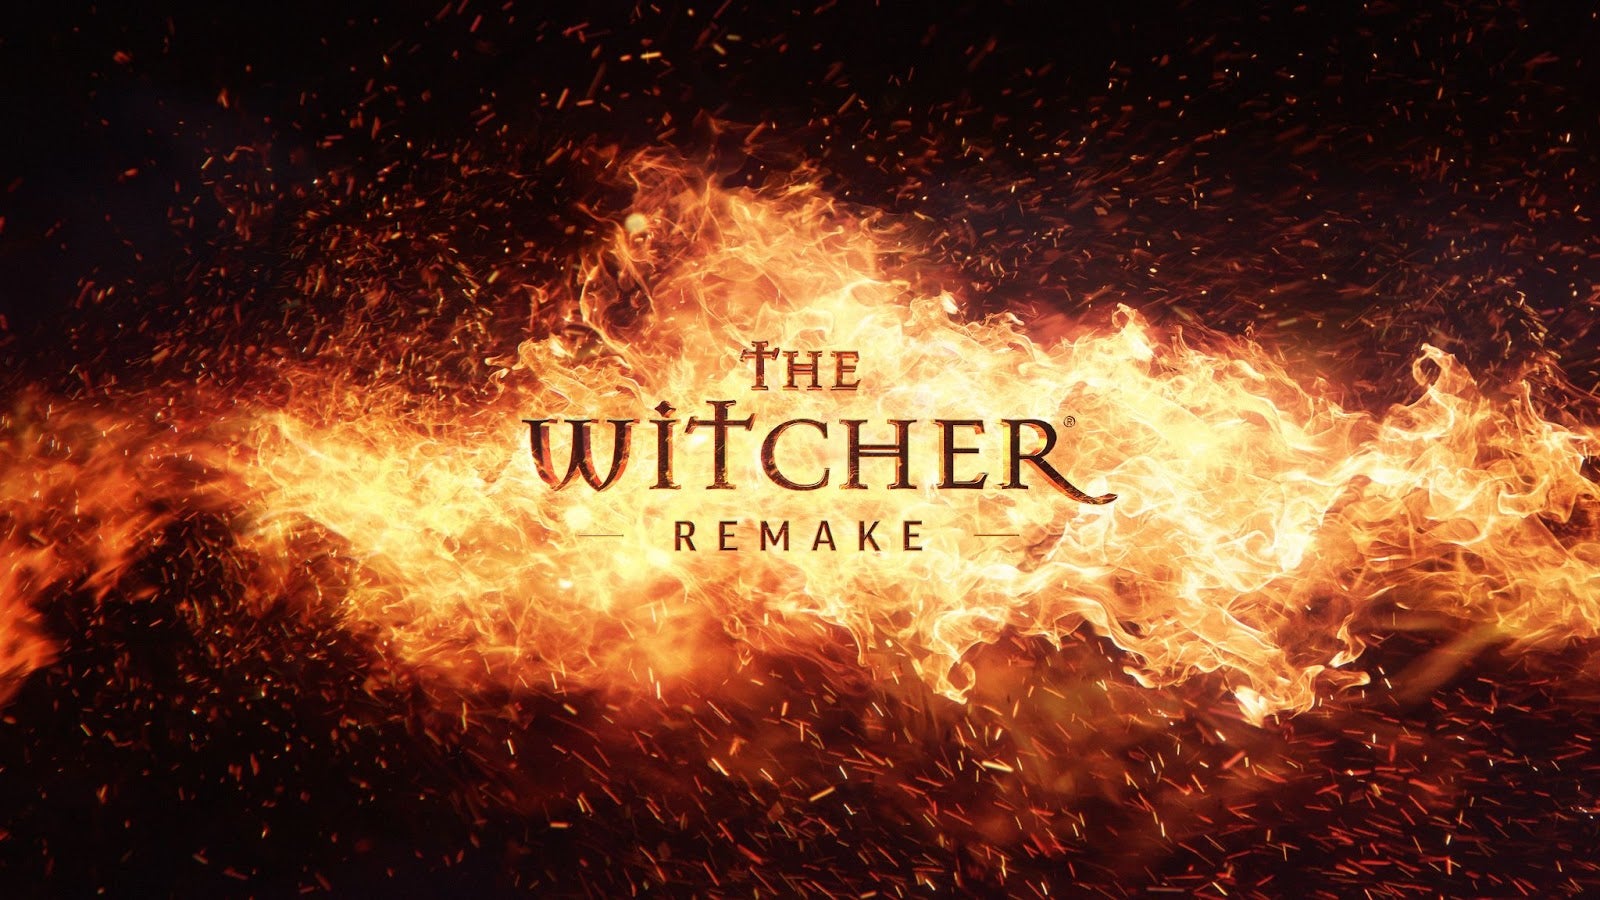 Witcher remake teaser art